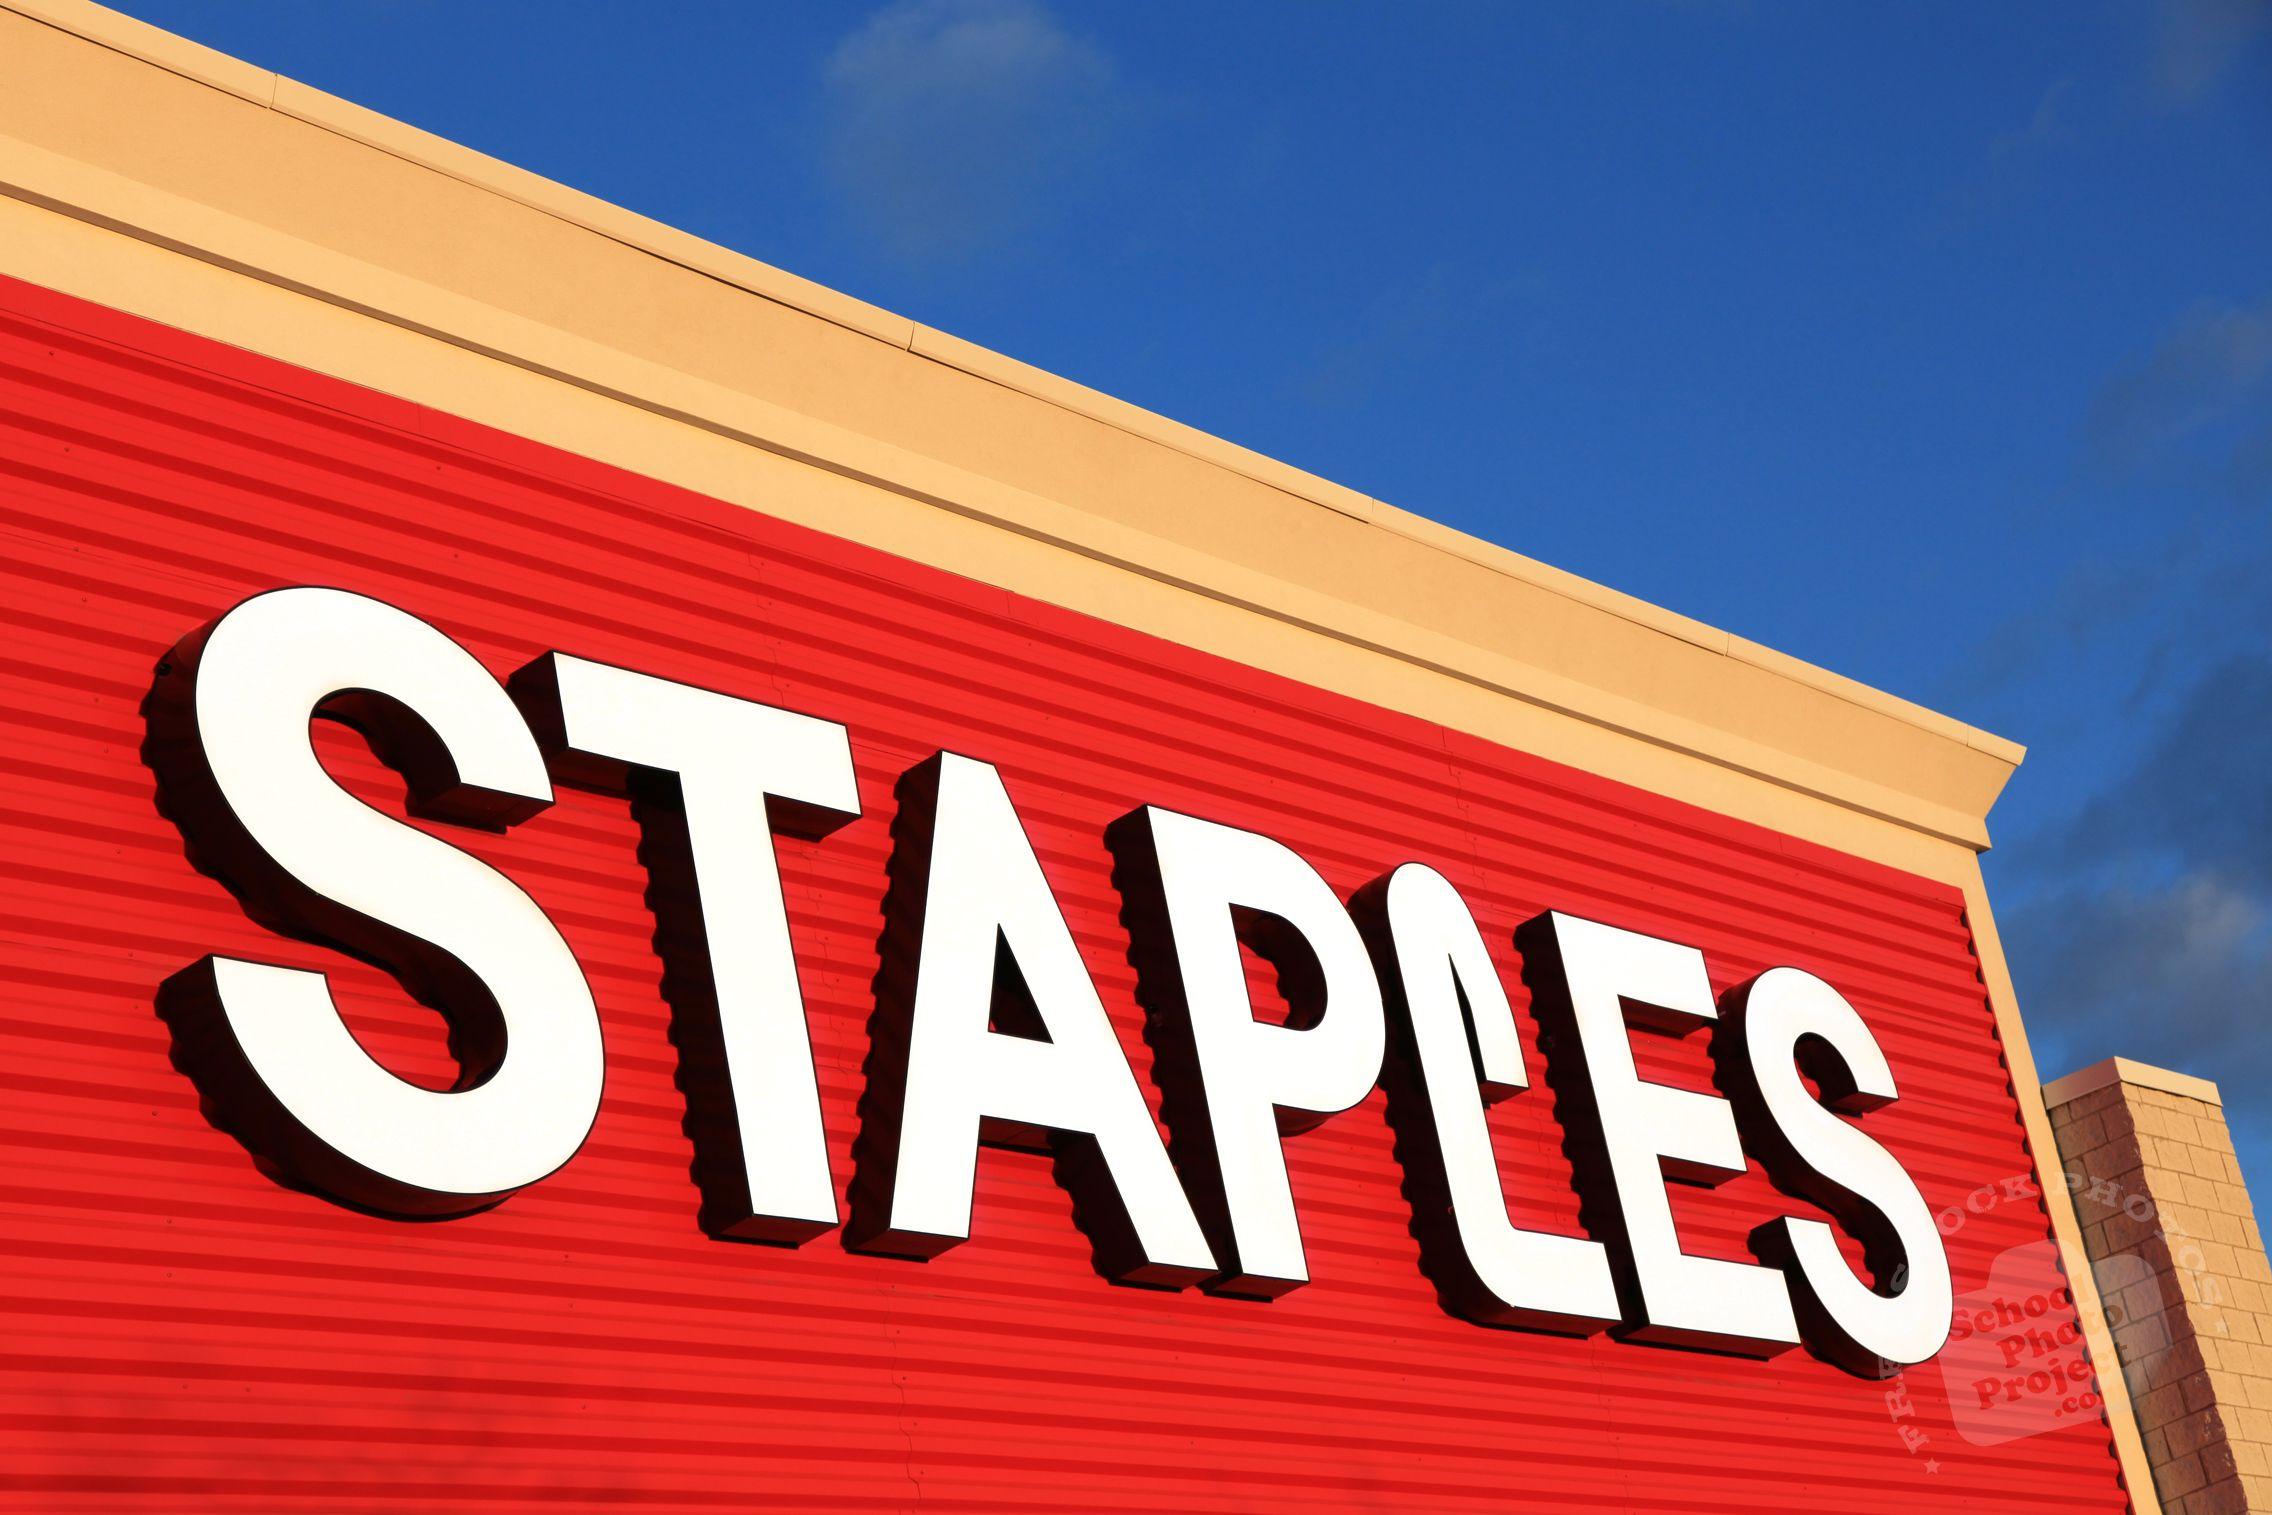 Staples Logo - FREE Staples Logo, Staples Office Supply Identity, Popular Company's ...